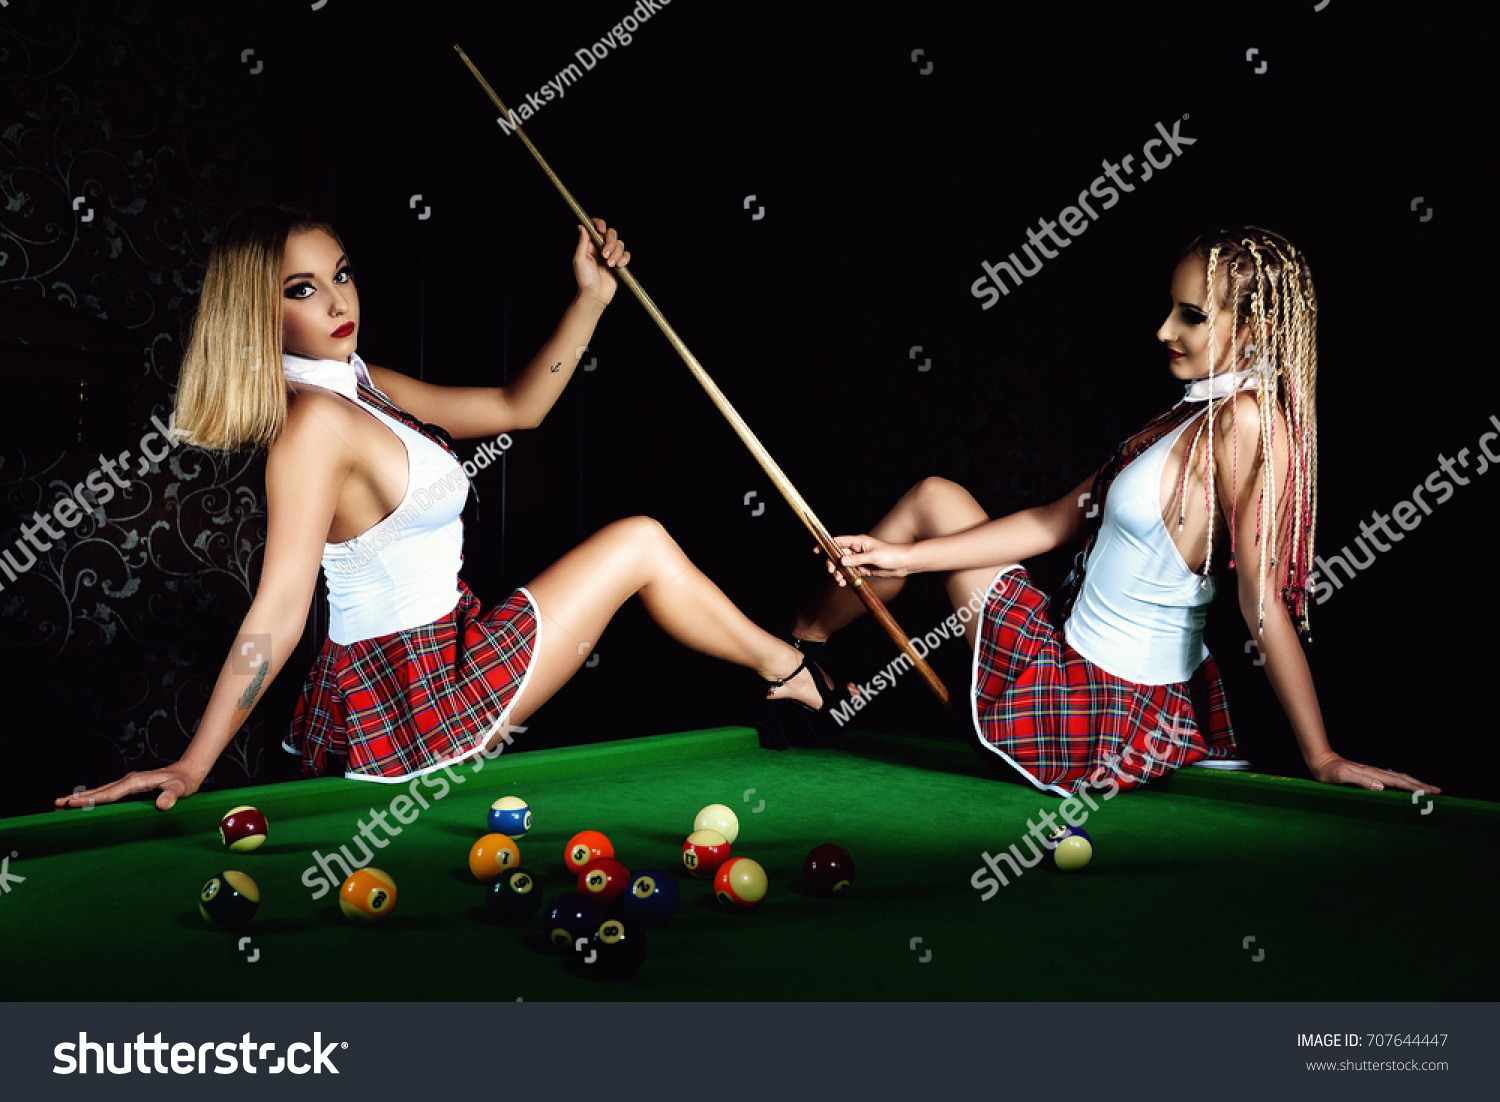 lesbian teens pool table